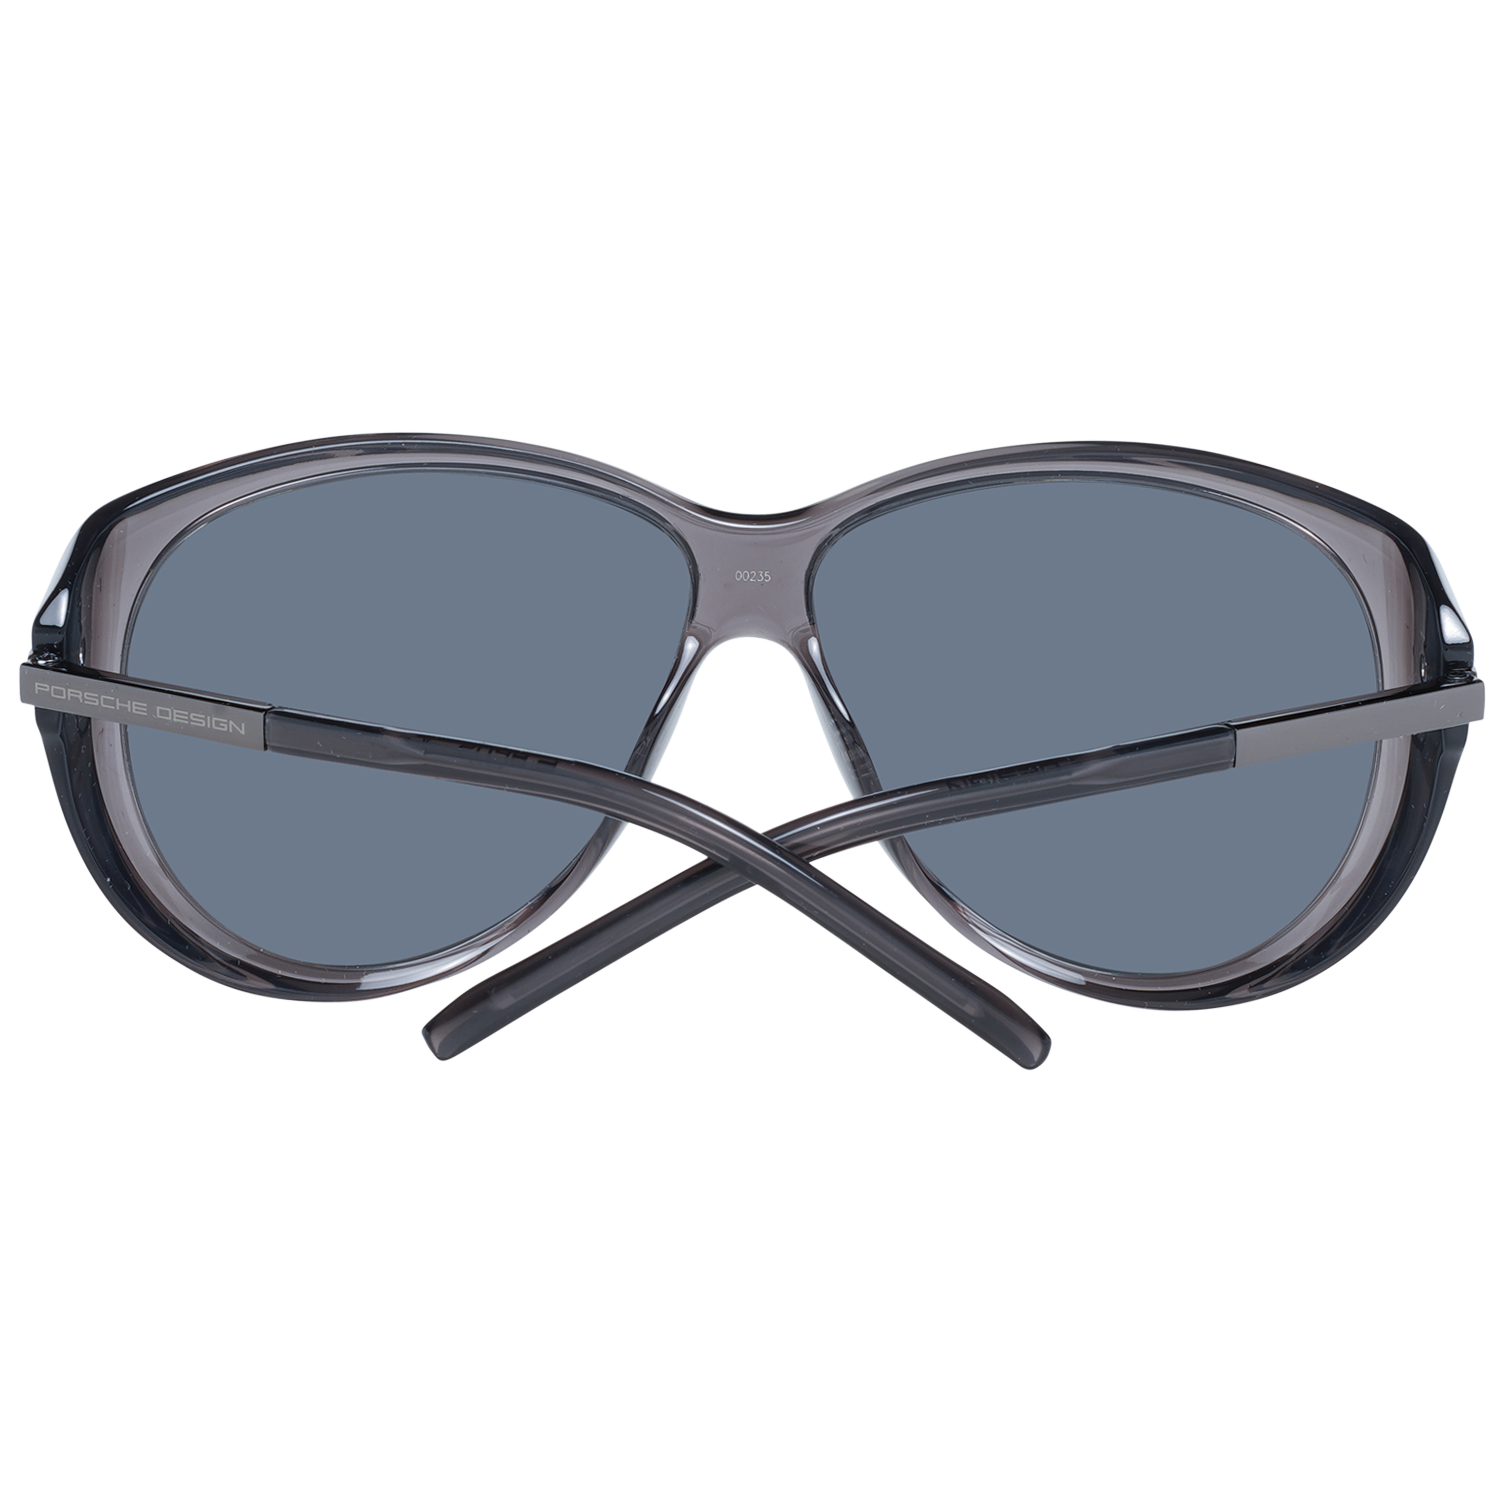 Porsche Design Sunglasses Porsche Design Sunglasses P8602 A 64mm Eyeglasses Eyewear UK USA Australia 